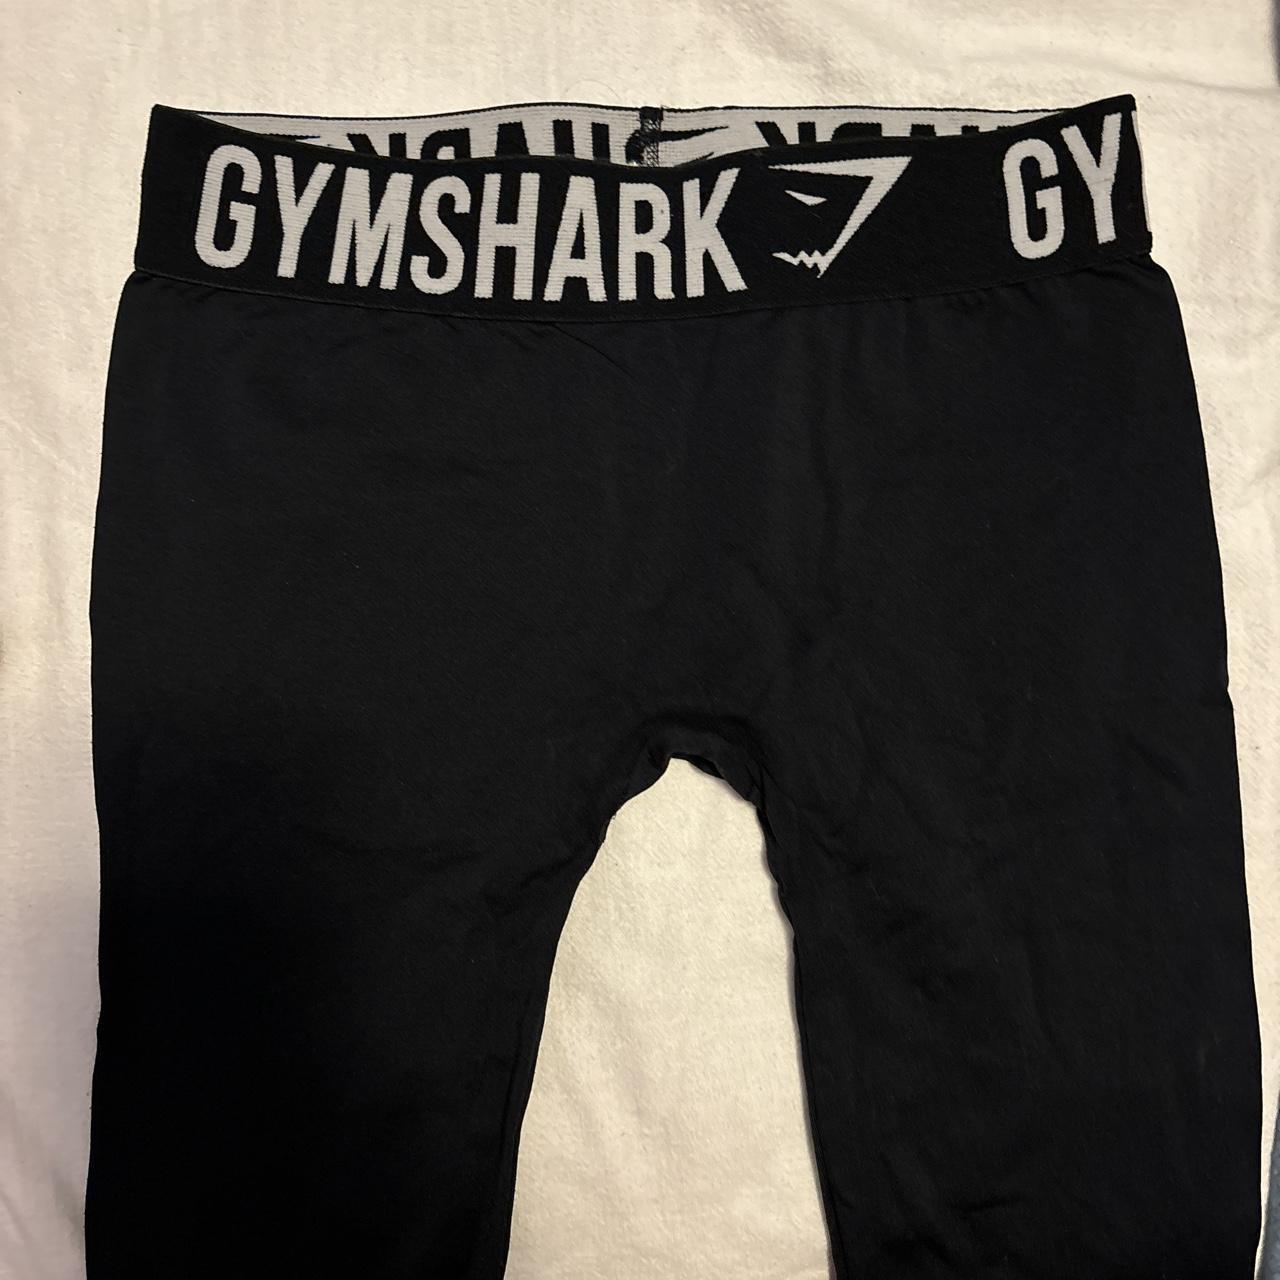 Gymshark shorts Size Small #gymshark #workout - Depop